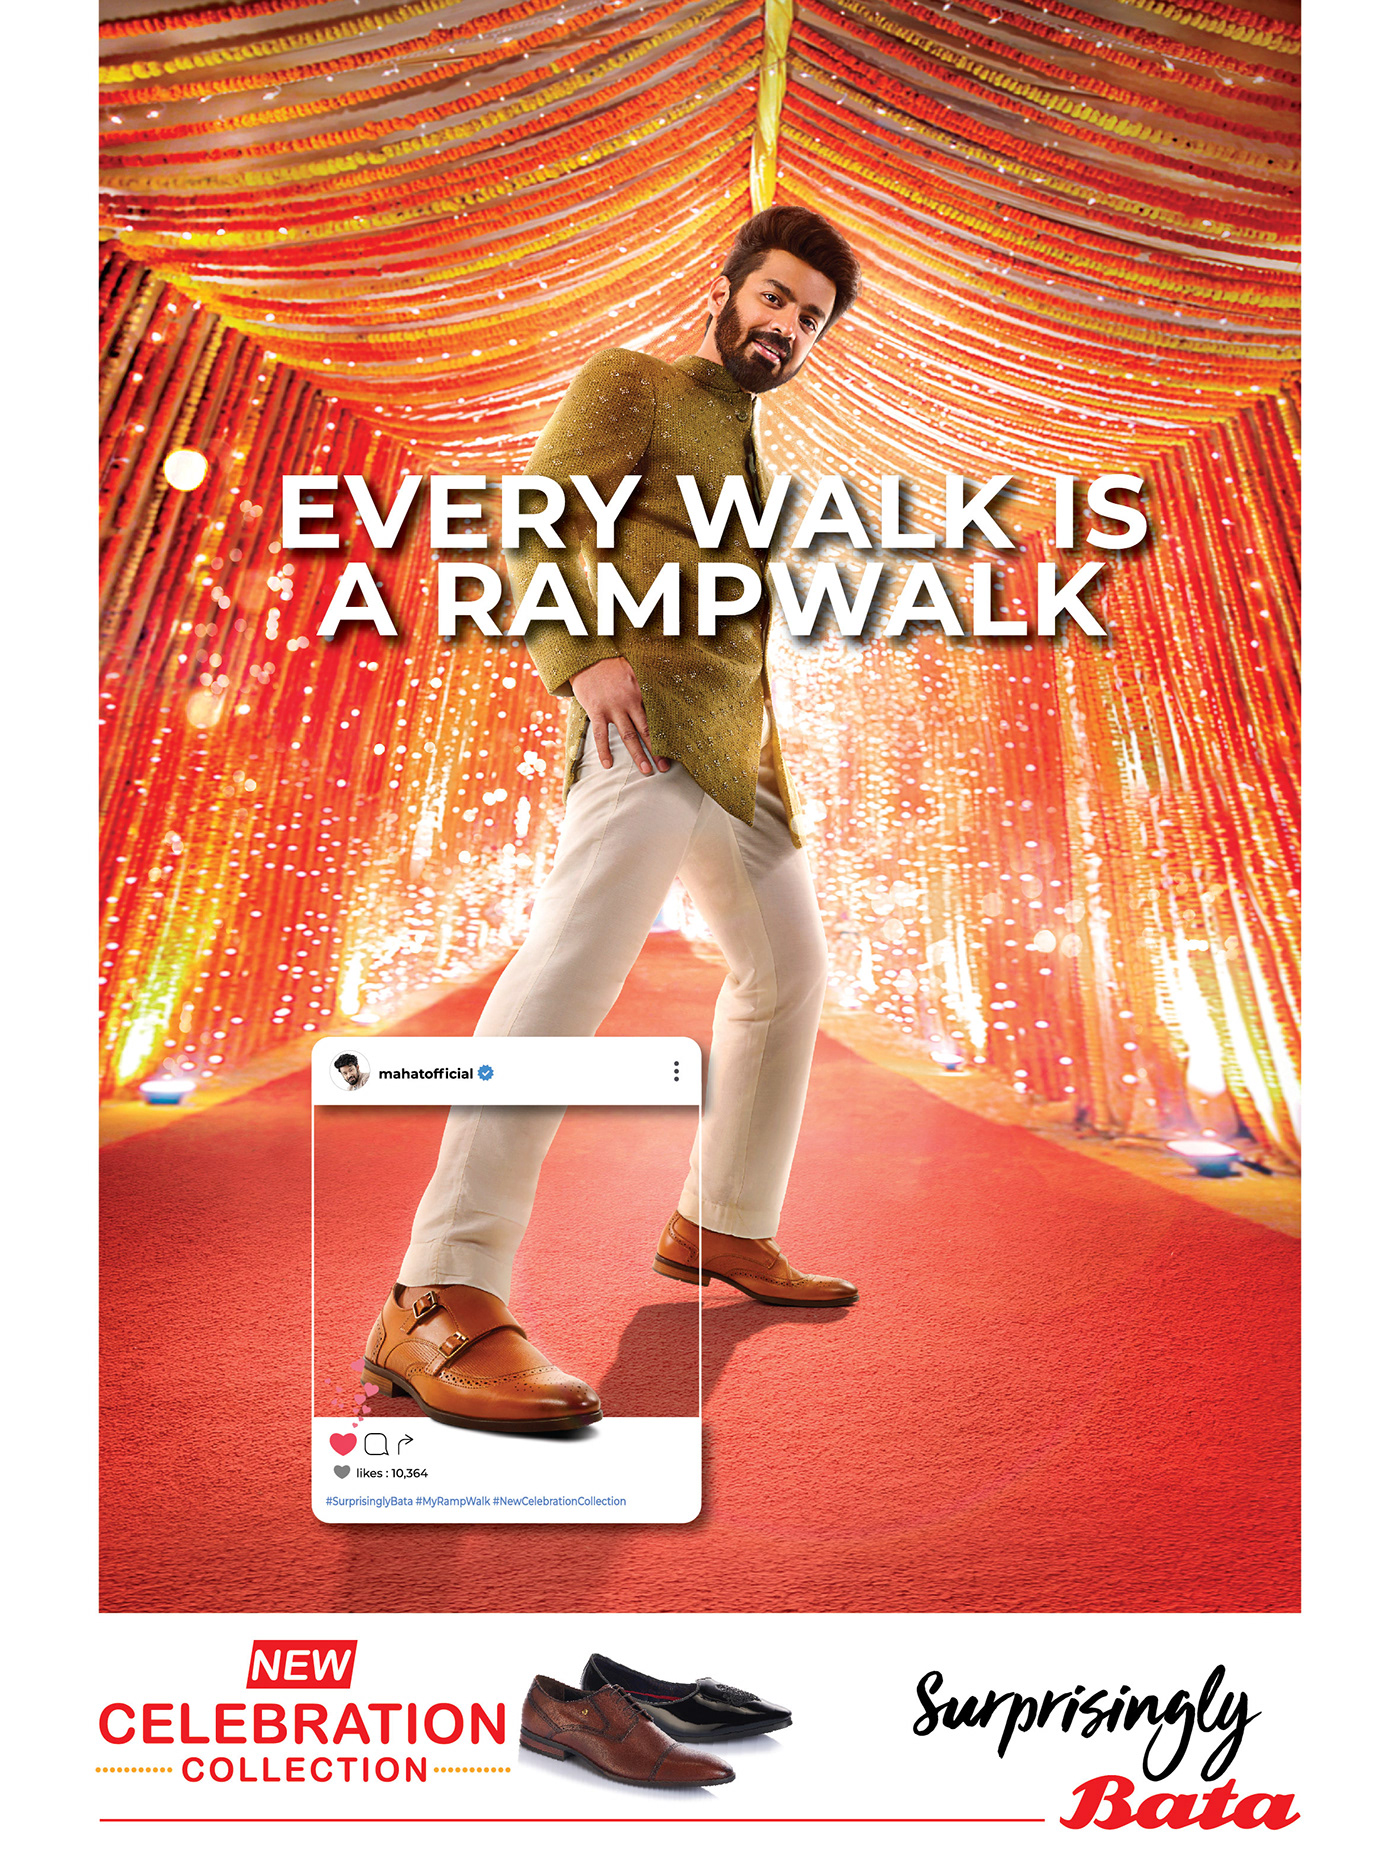 Fashion  footwear rampwalk ArtDirection influencer marketing Socialmedia visual identity advertisingagency digitaladvertising